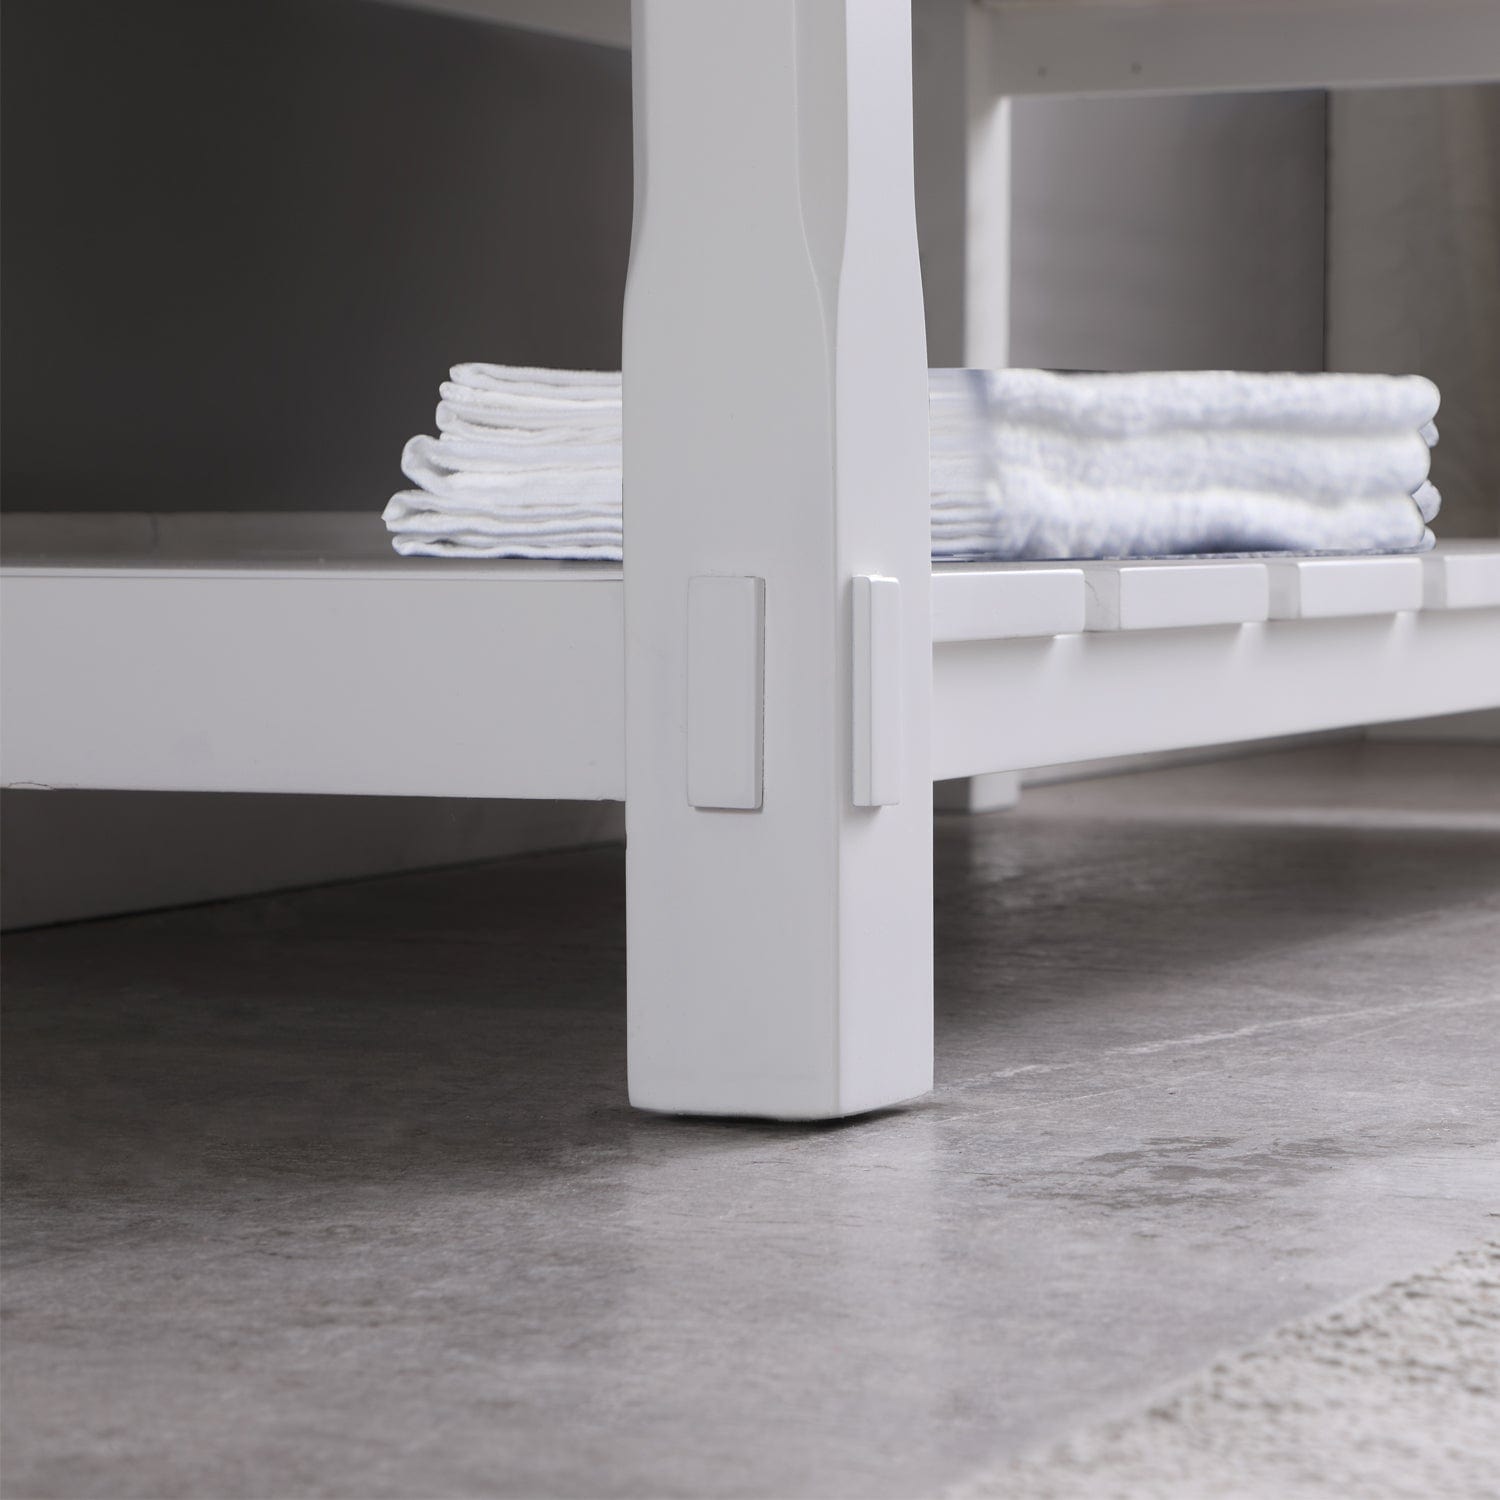 Altair Georgia 48" Single Bathroom Vanity Set in White and Composite Carrara White Stone Top with White Farmhouse Basin with Mirror 537048-WH-AW - Molaix631112970617Vanity537048-WH-AW